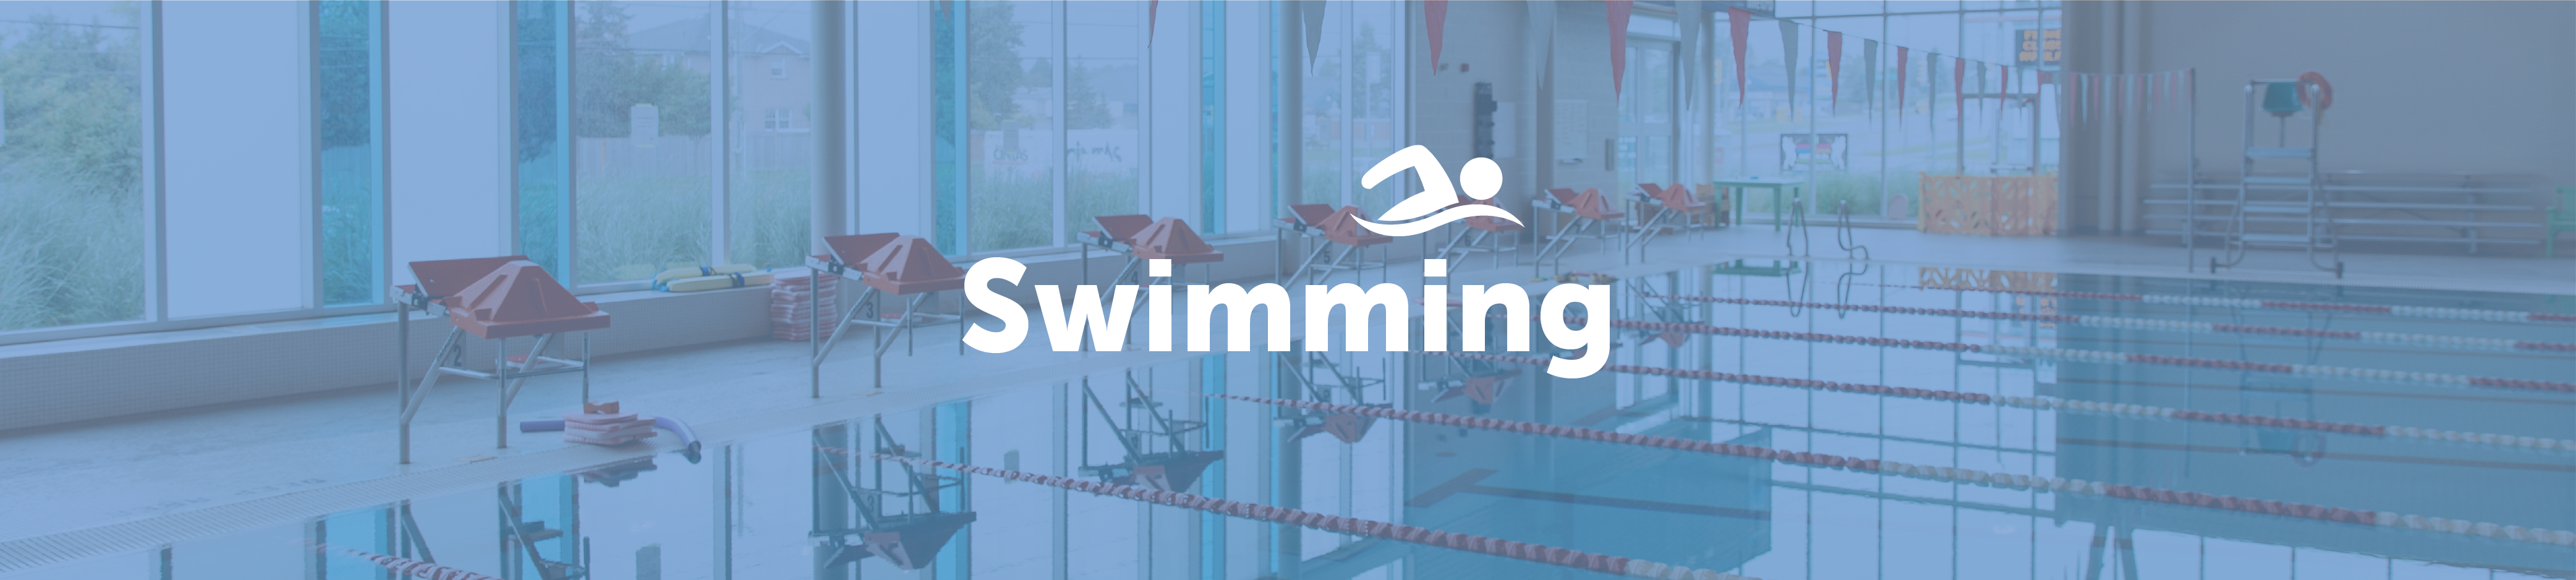 swimming programs banner